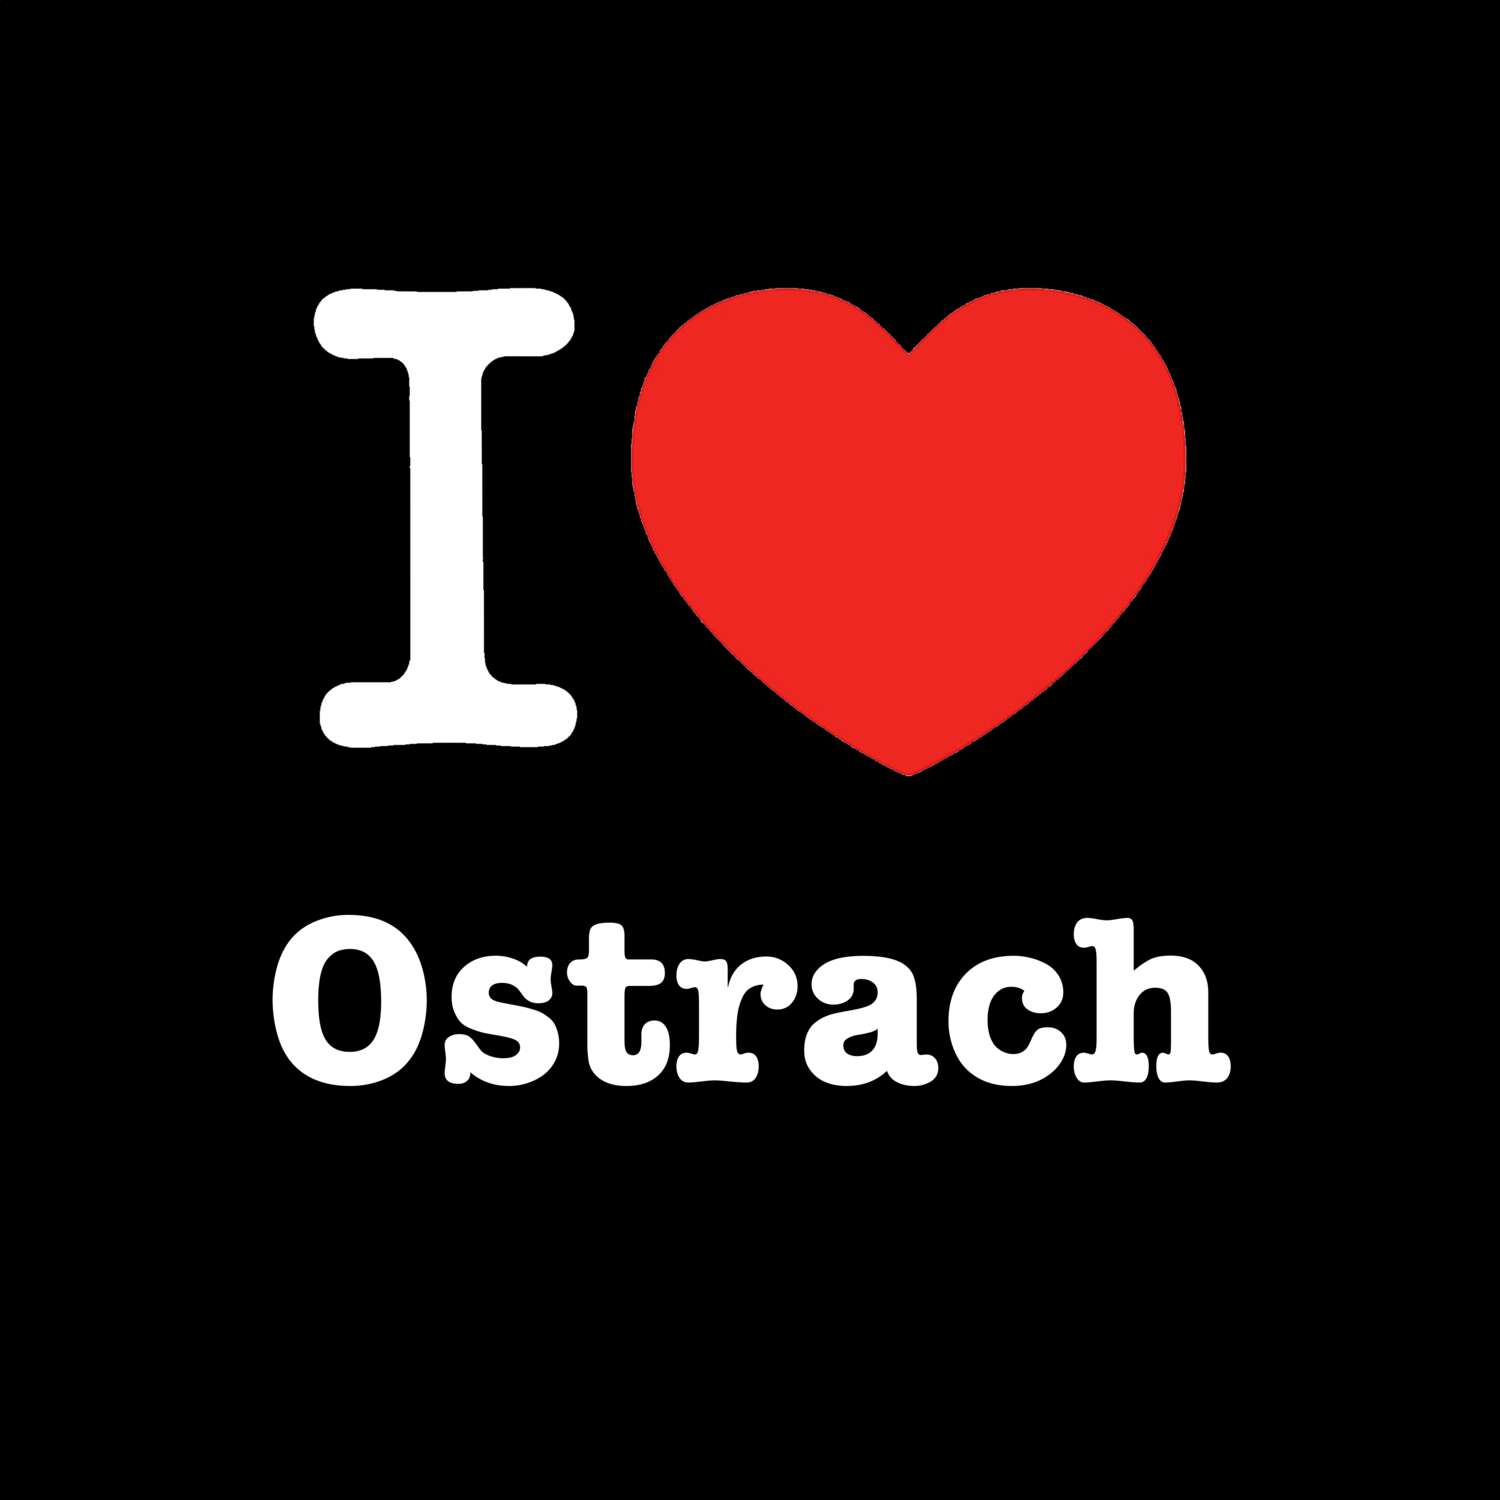 Ostrach T-Shirt »I love«